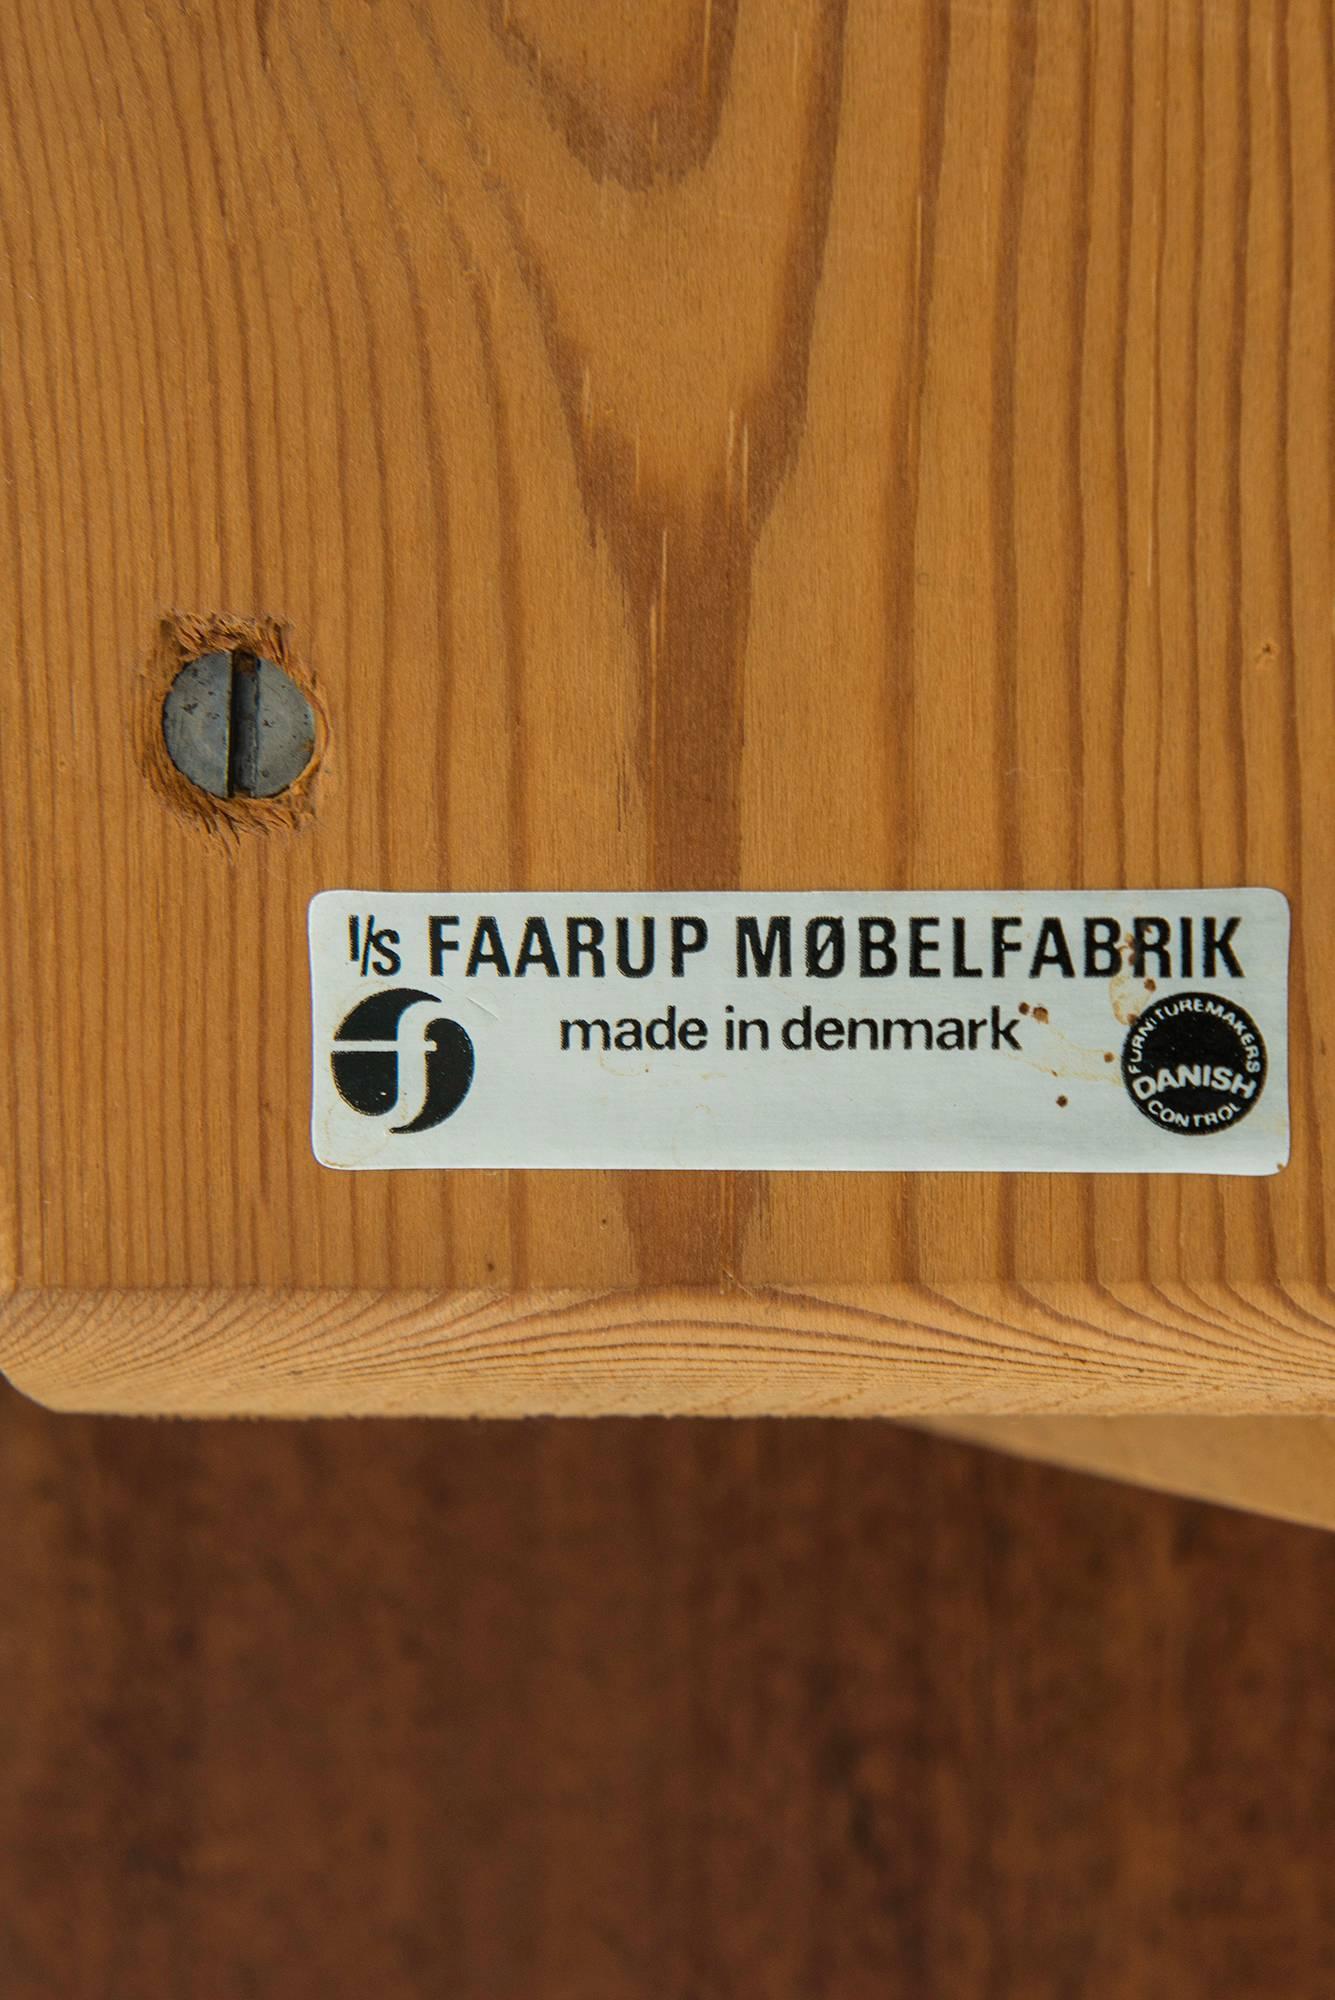 Ib Kofod-Larsen Dining Table by Faarup Møbelfabrik in Denmark 1